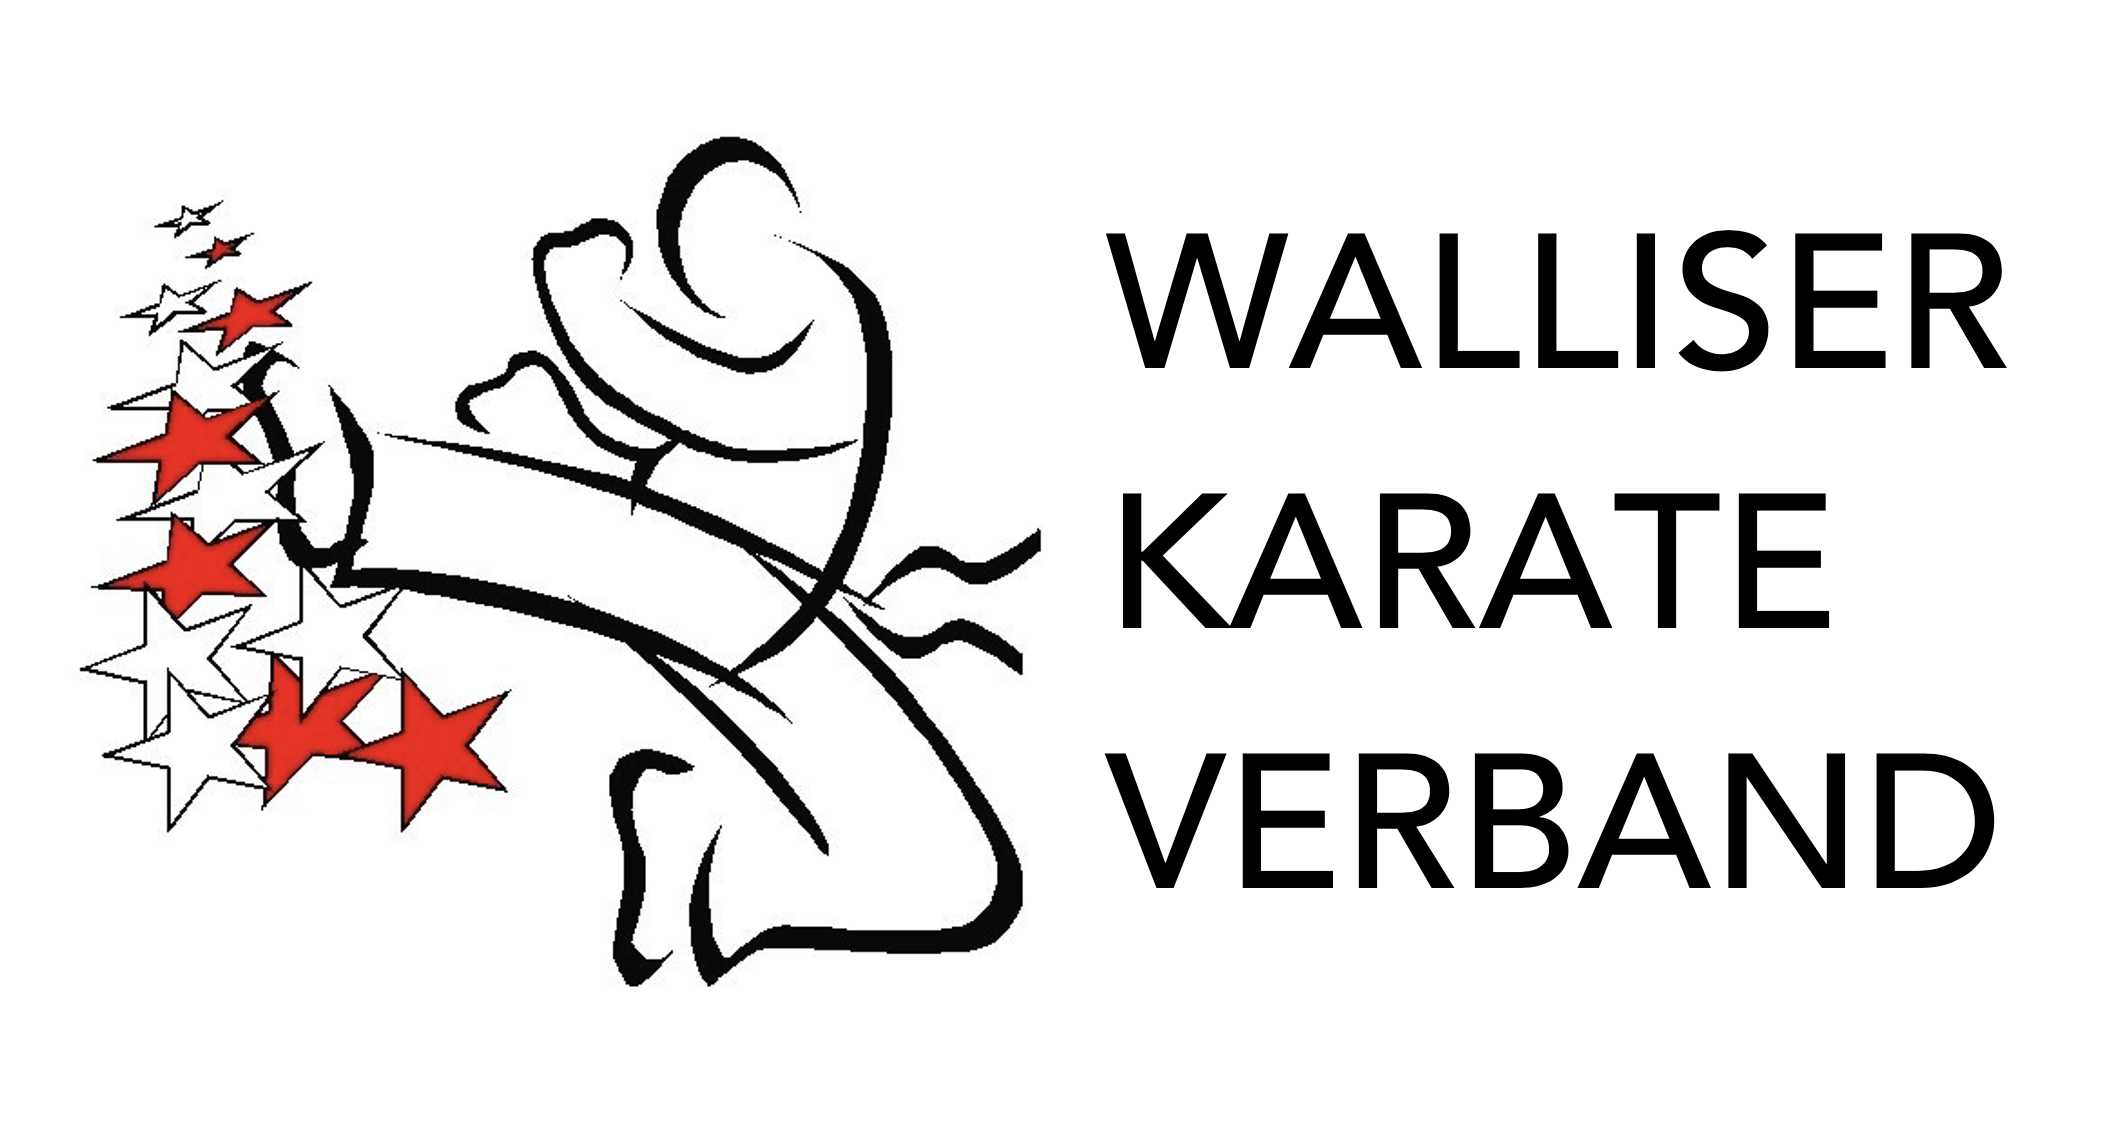 Walliser Karate Verband